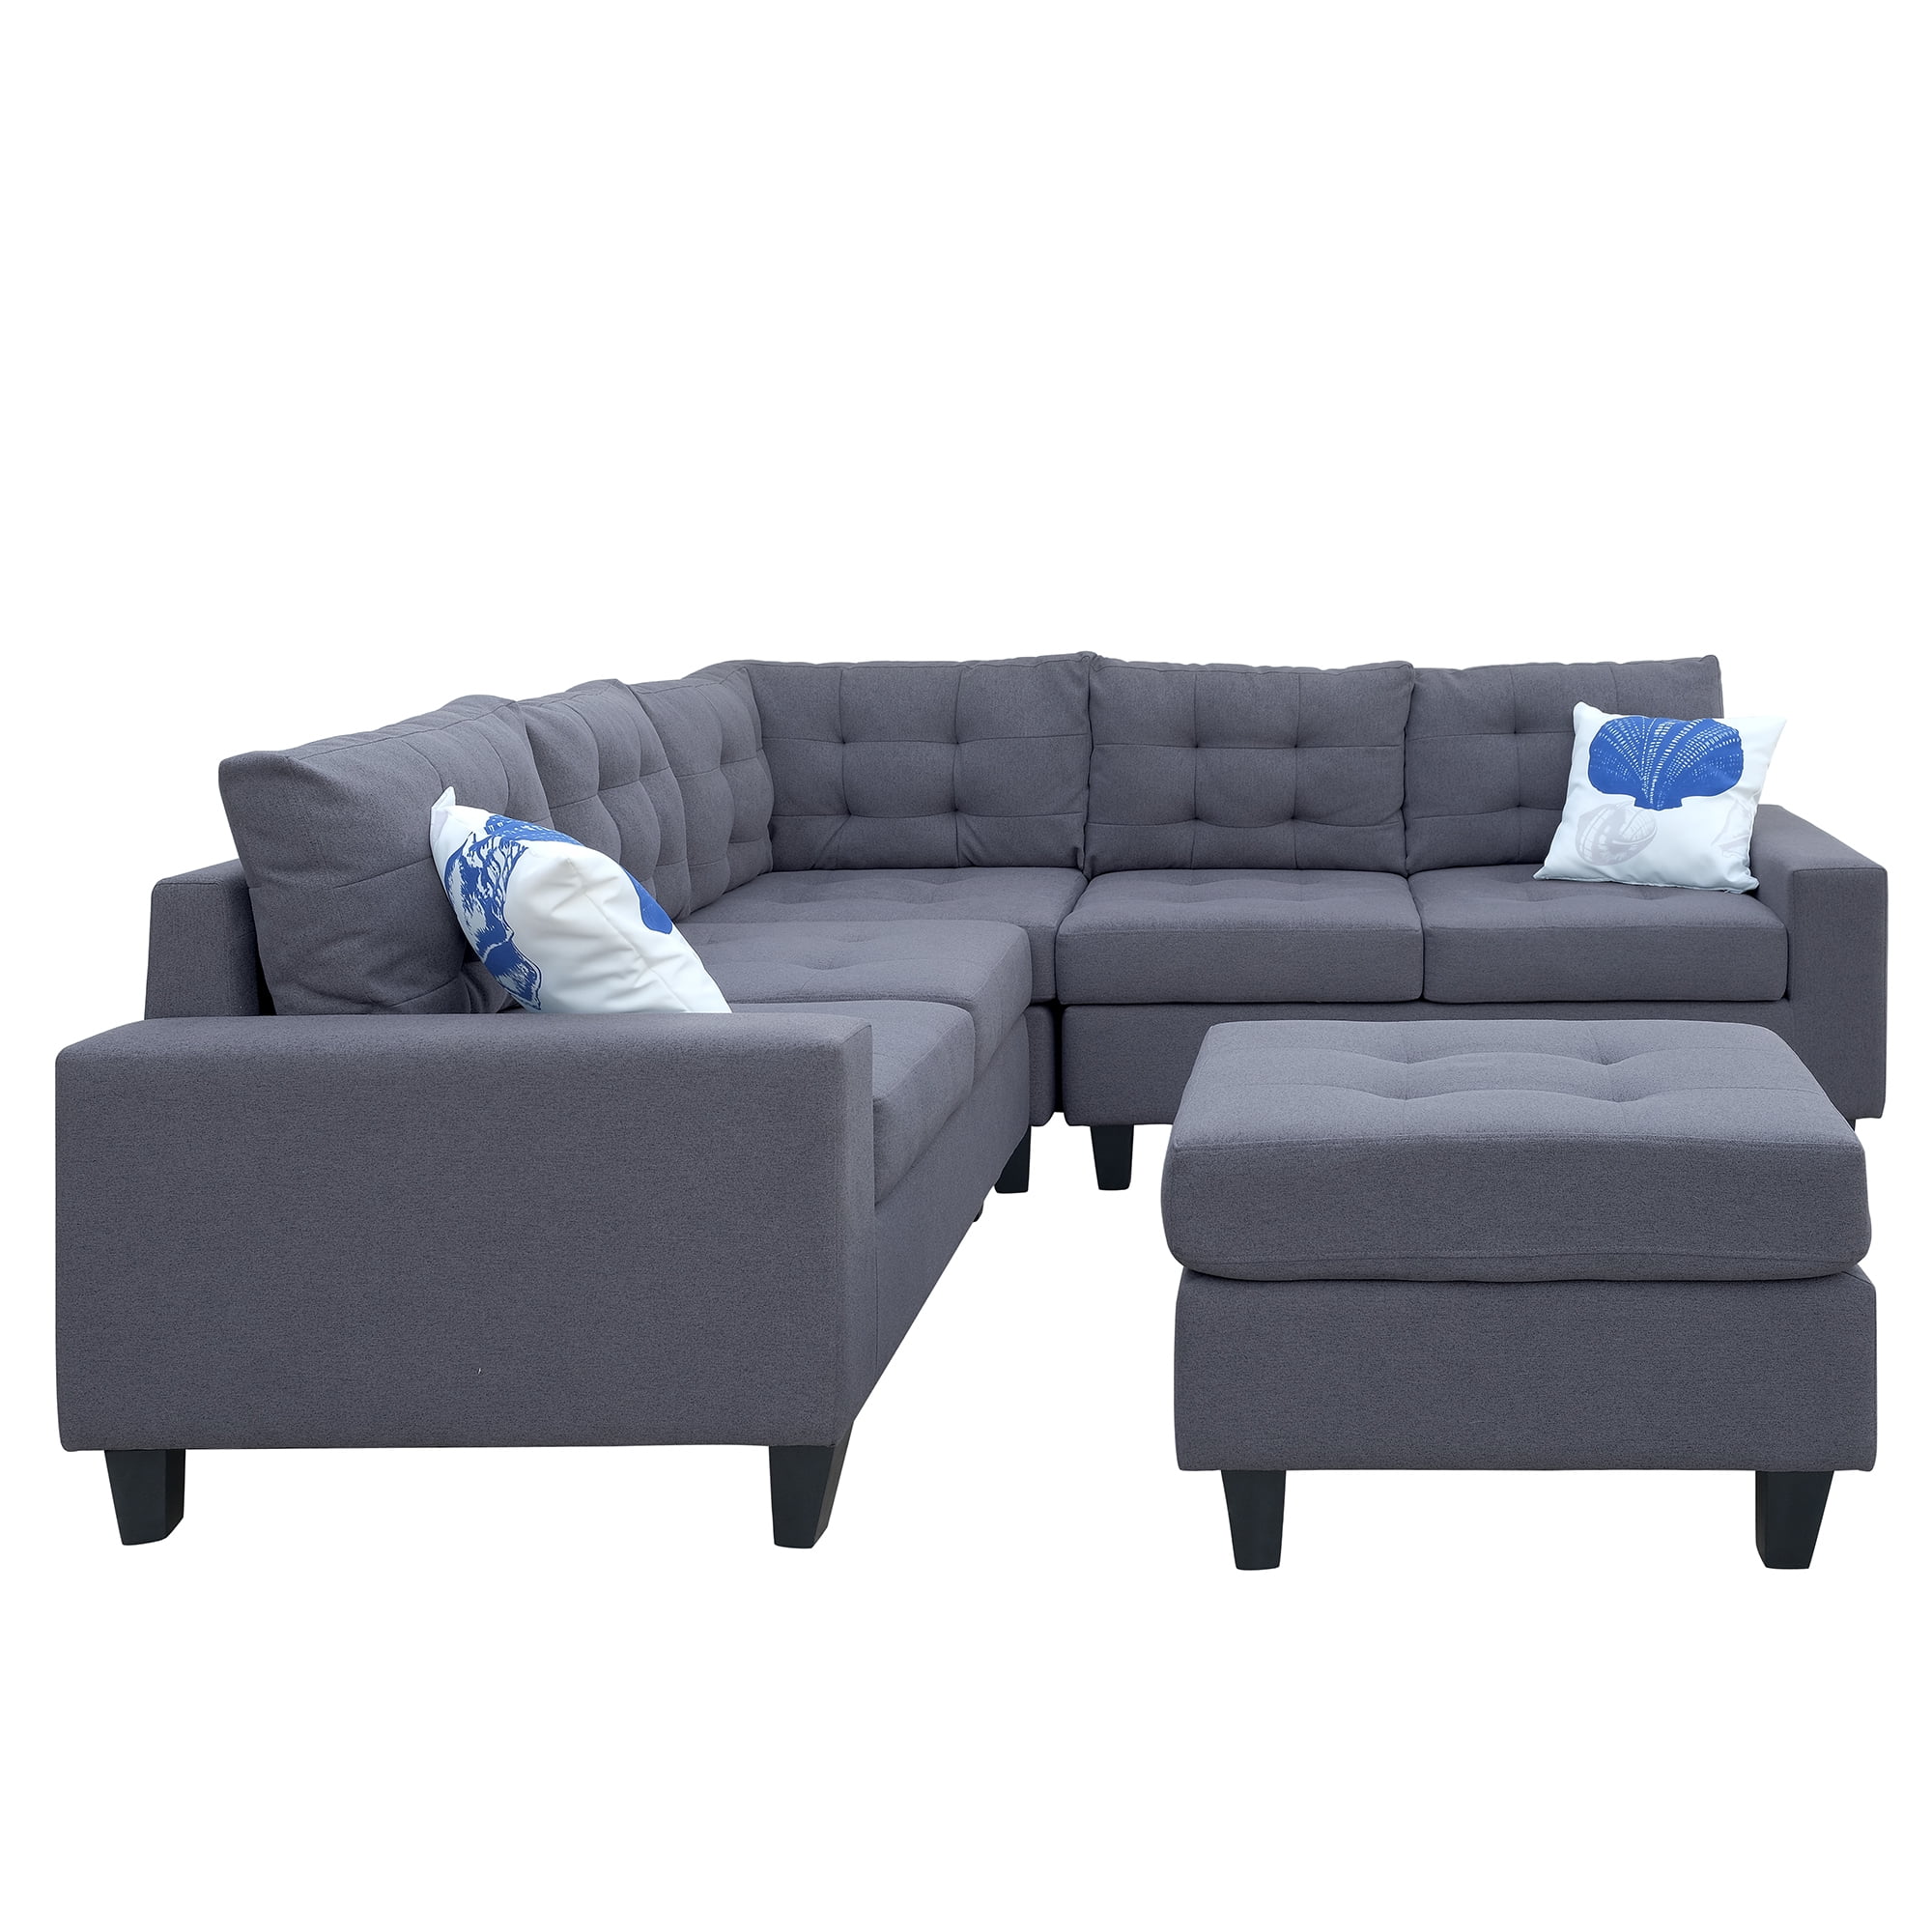 Clearance! Sectional Sofa, Modern Fabric Sectional Sofa with Chaise, Sectional Sofa with Storage ...